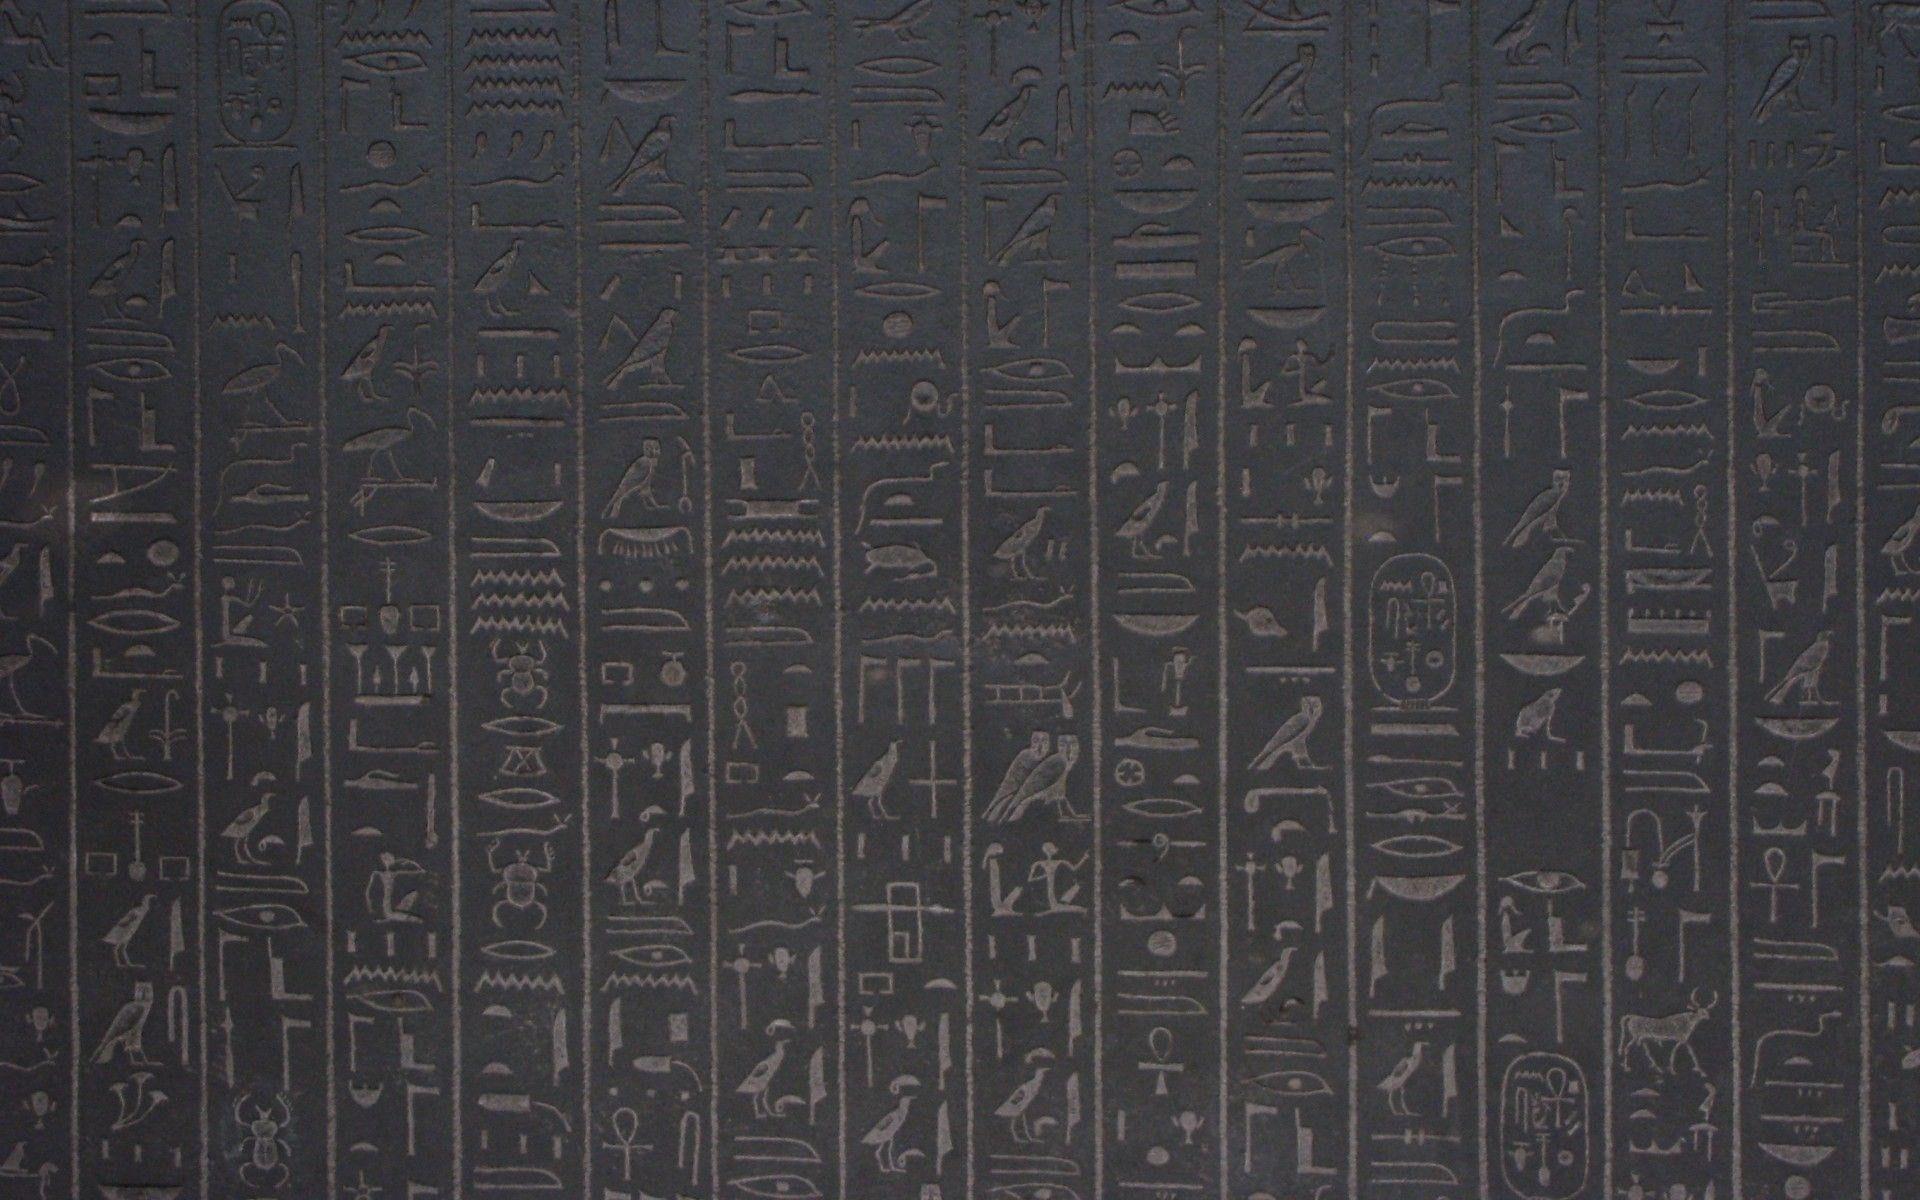 Wallpaper Roll Egyptian Egypt Hieroglyphics Hieroglyphs Ancient 24in x 27ft 